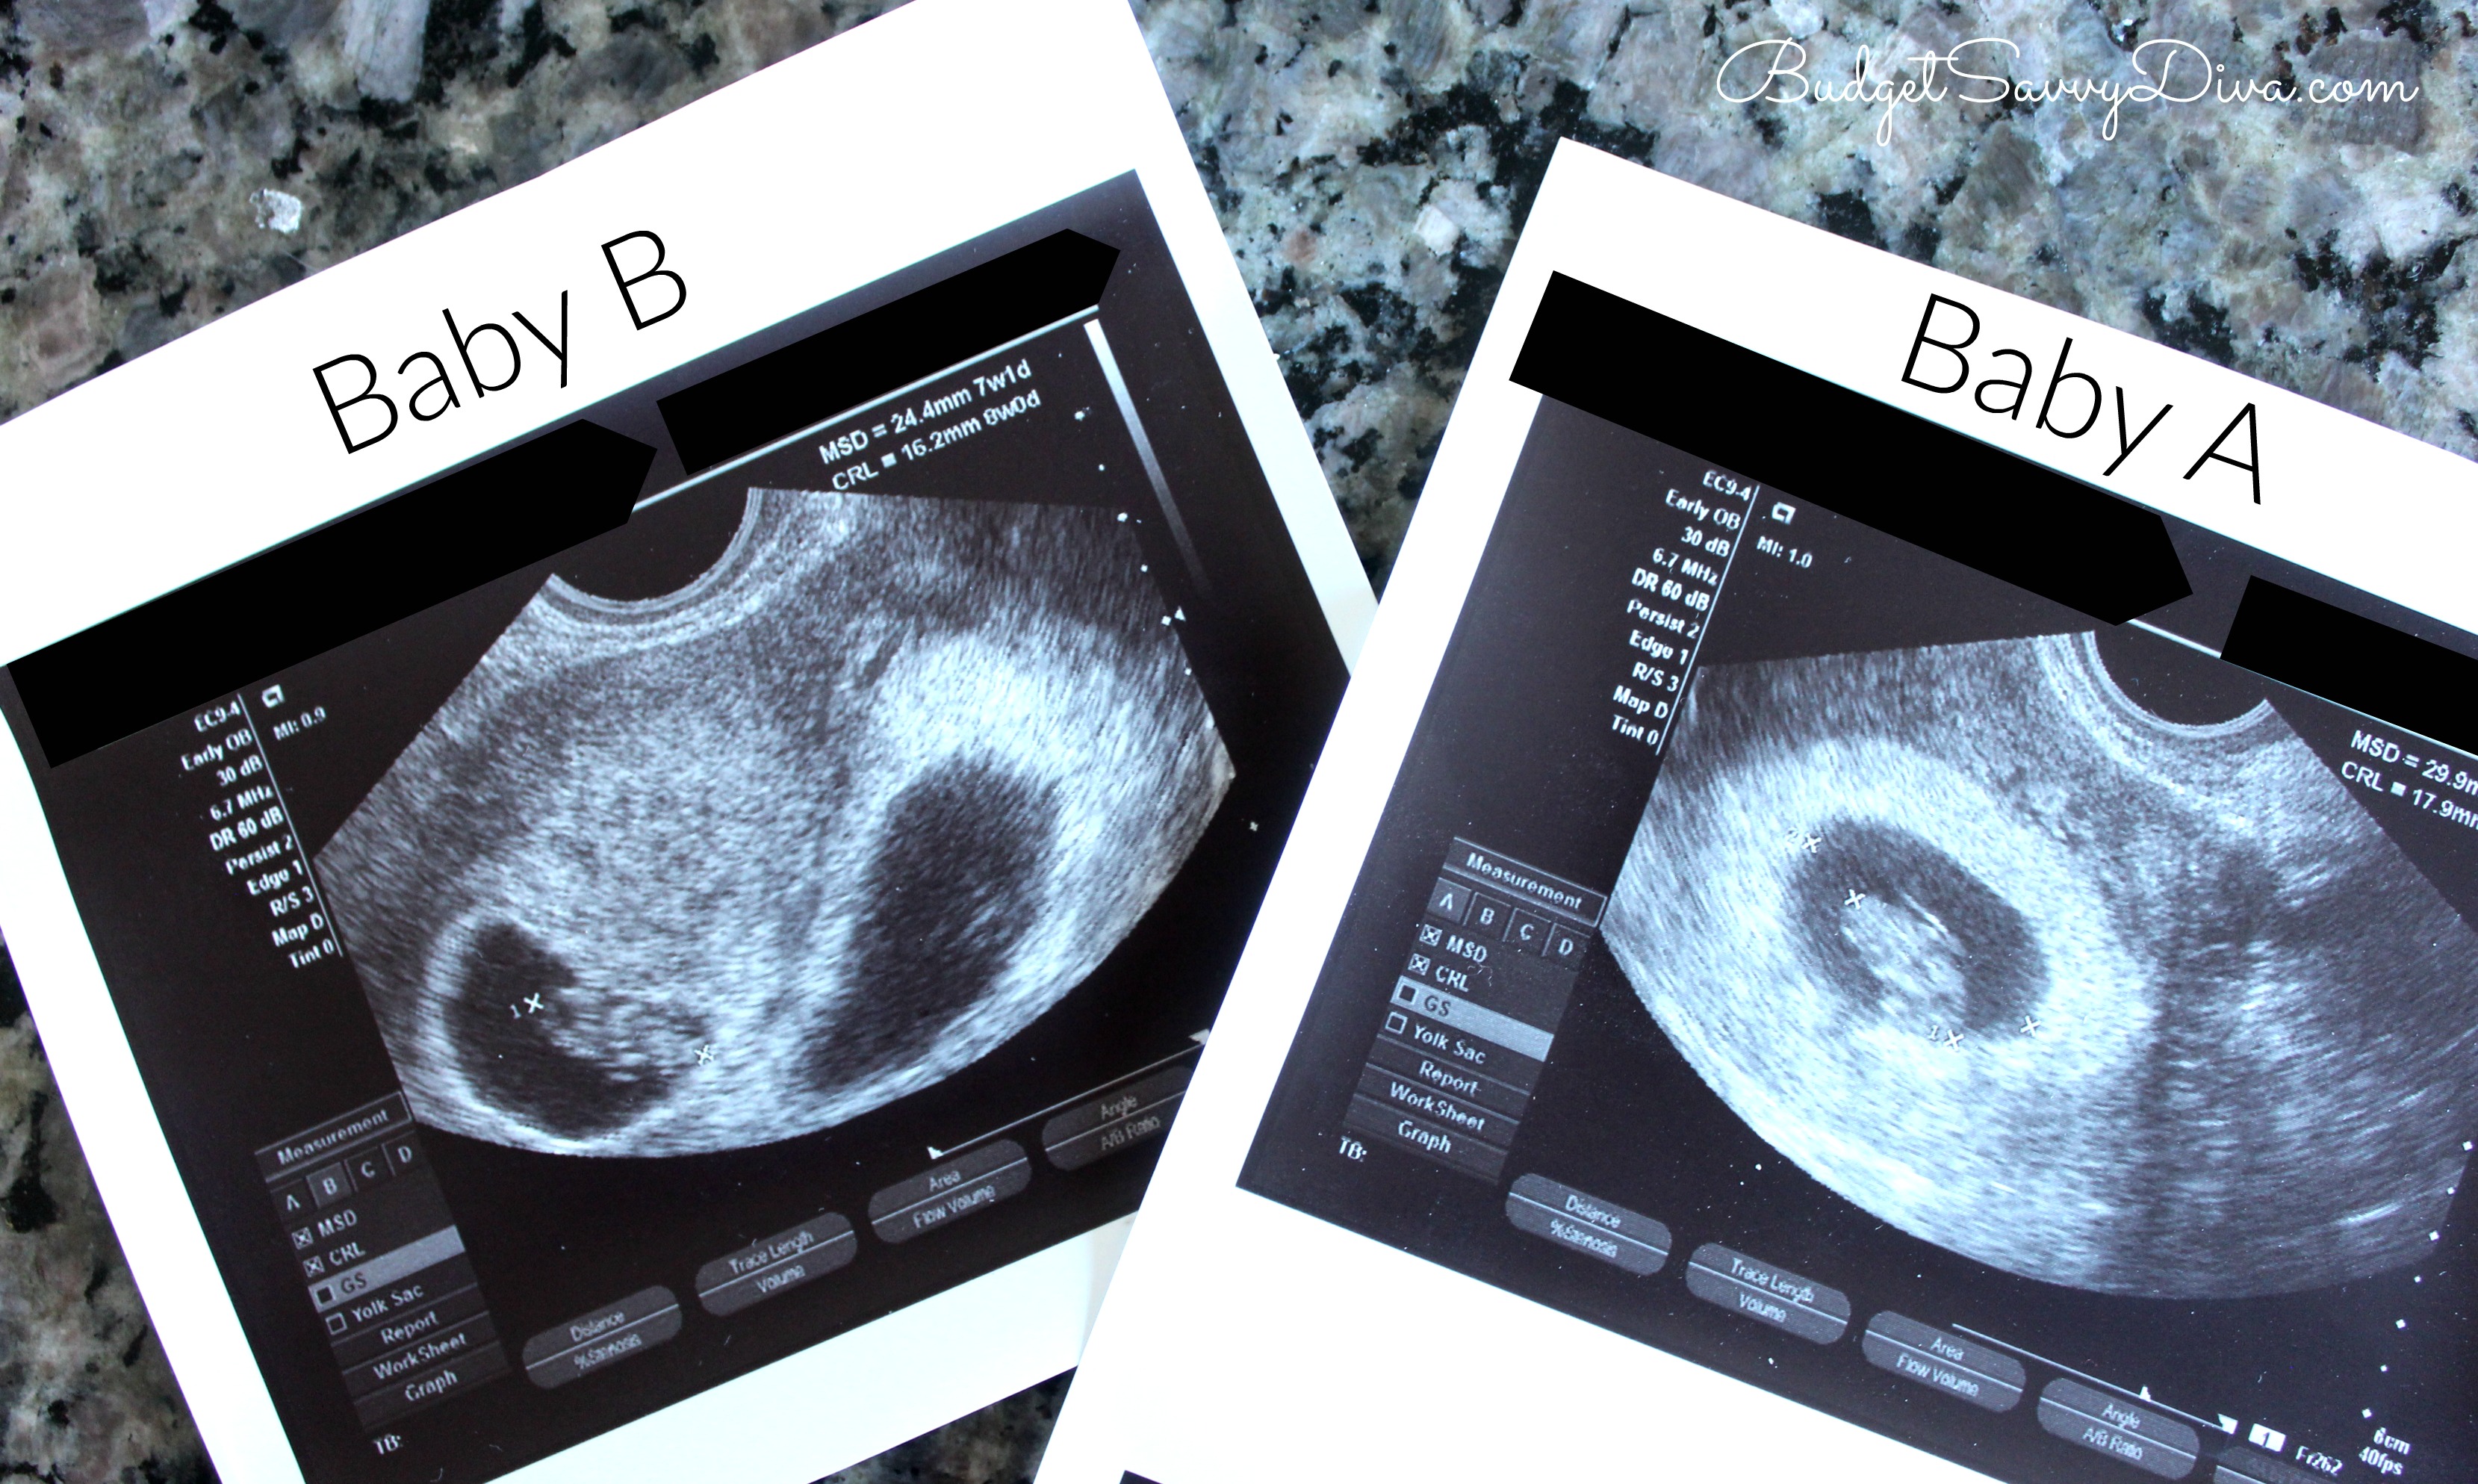 8 week ultrasound identical twins